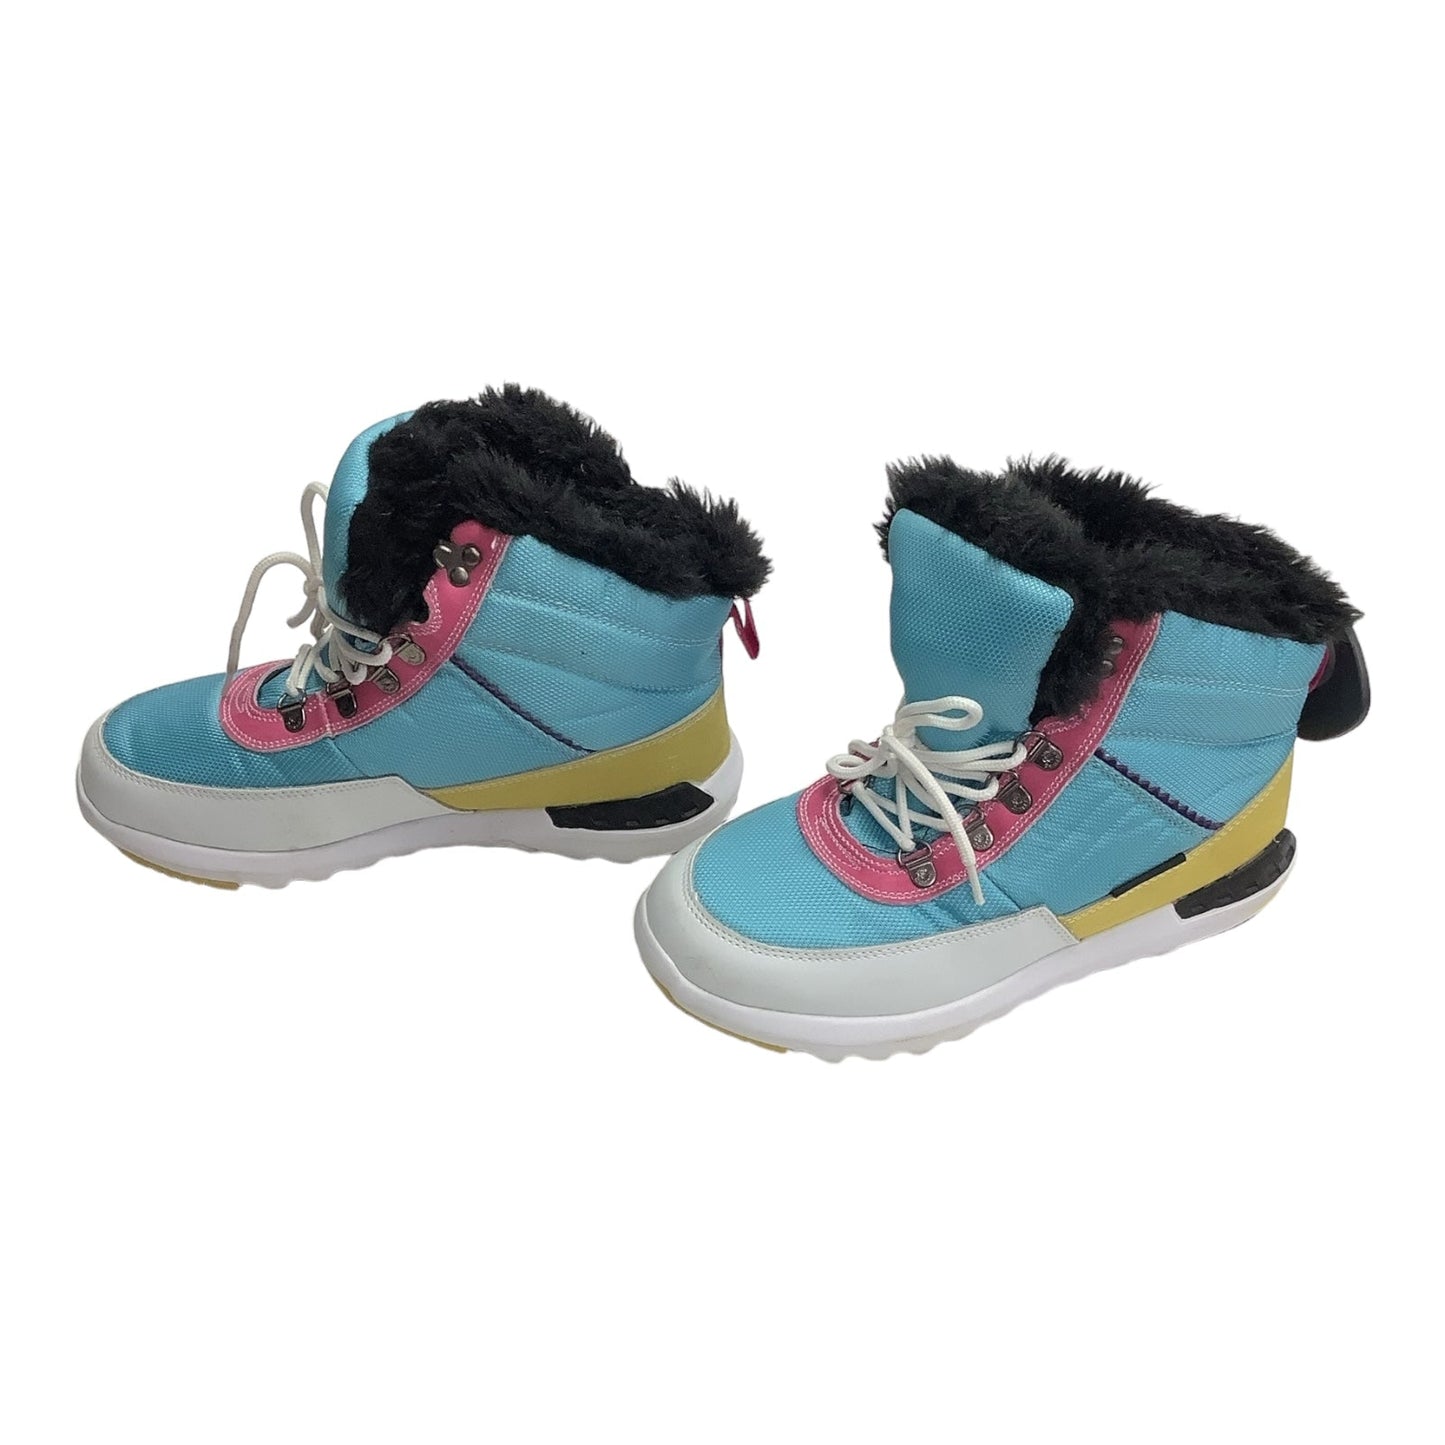 Blue Boots Snow Bearpaw, Size 9